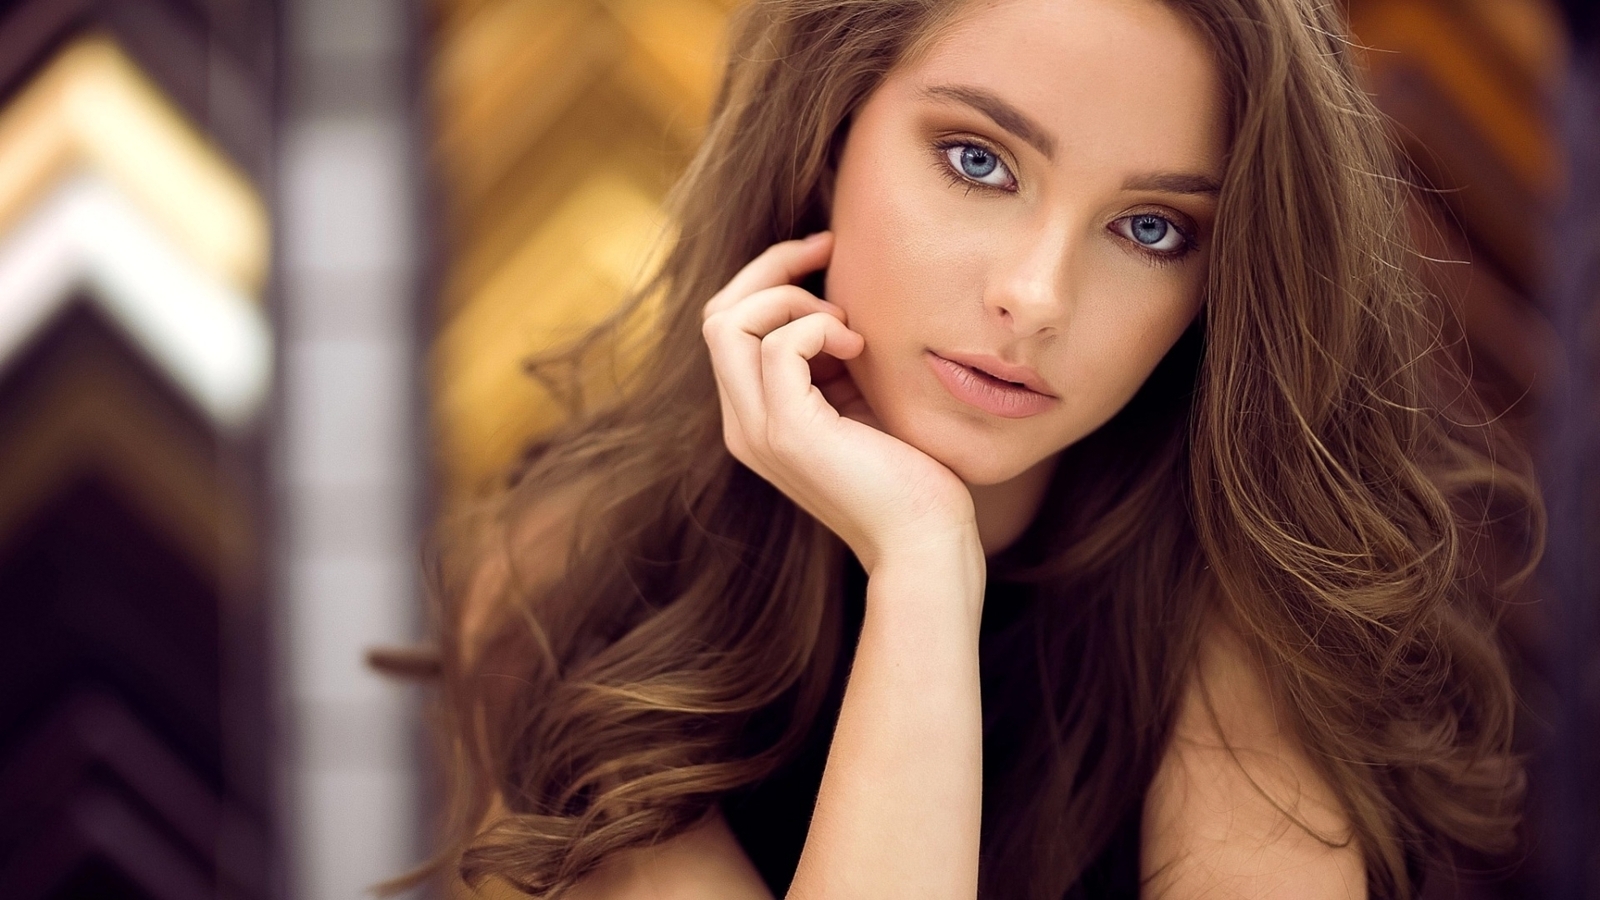 Image: Girl, brown hair, blue eyes, face, hand near a face